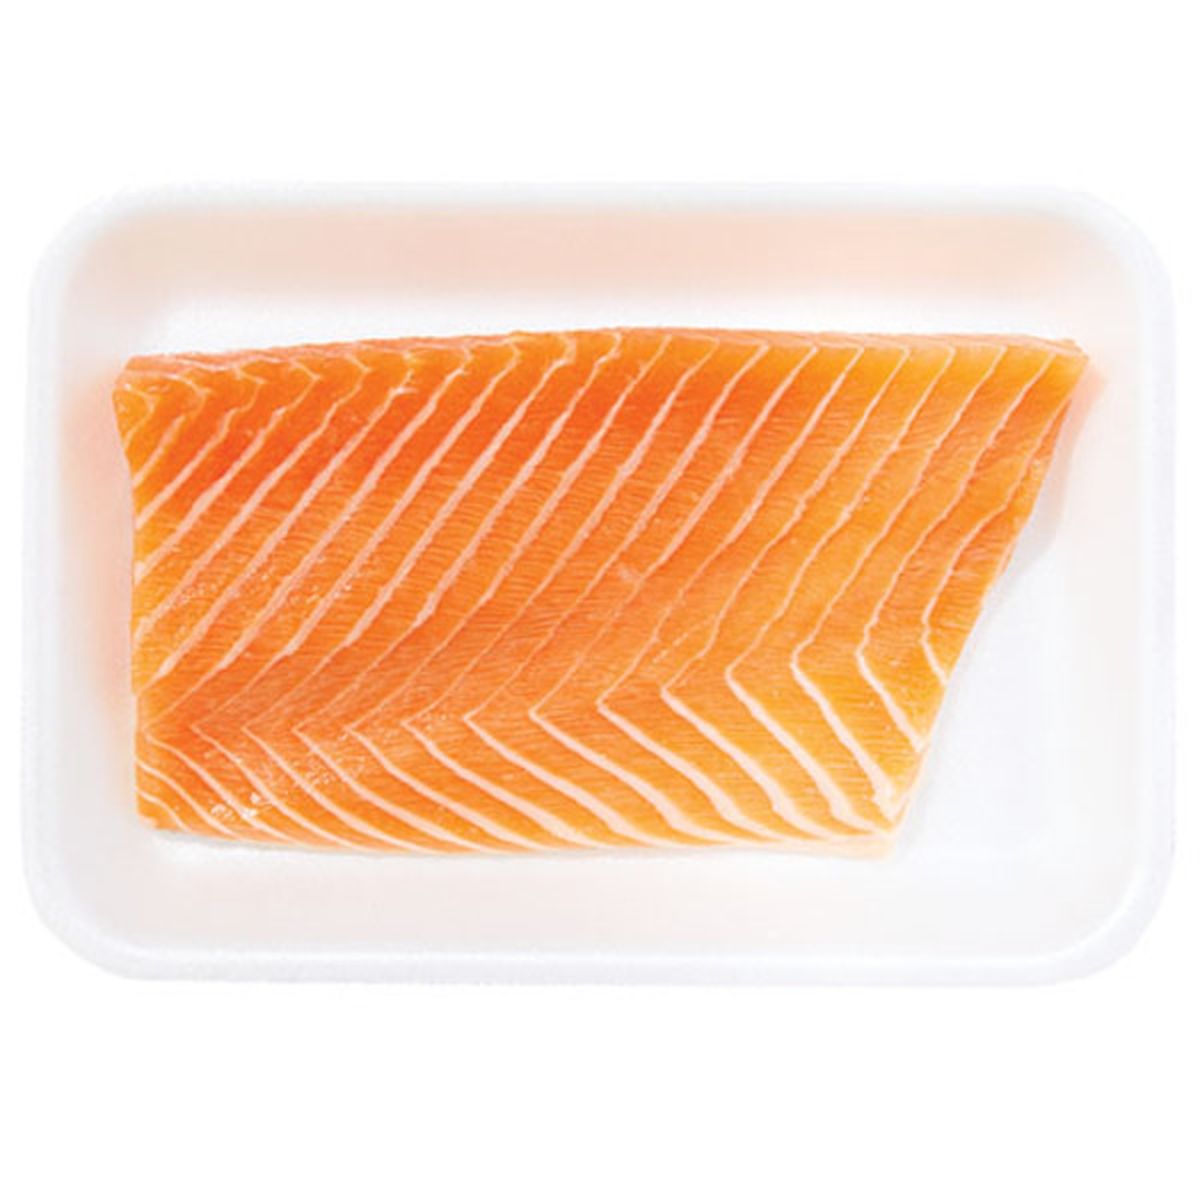 Calories in Wegmans Fresh Atlantic Salmon Belly Cut